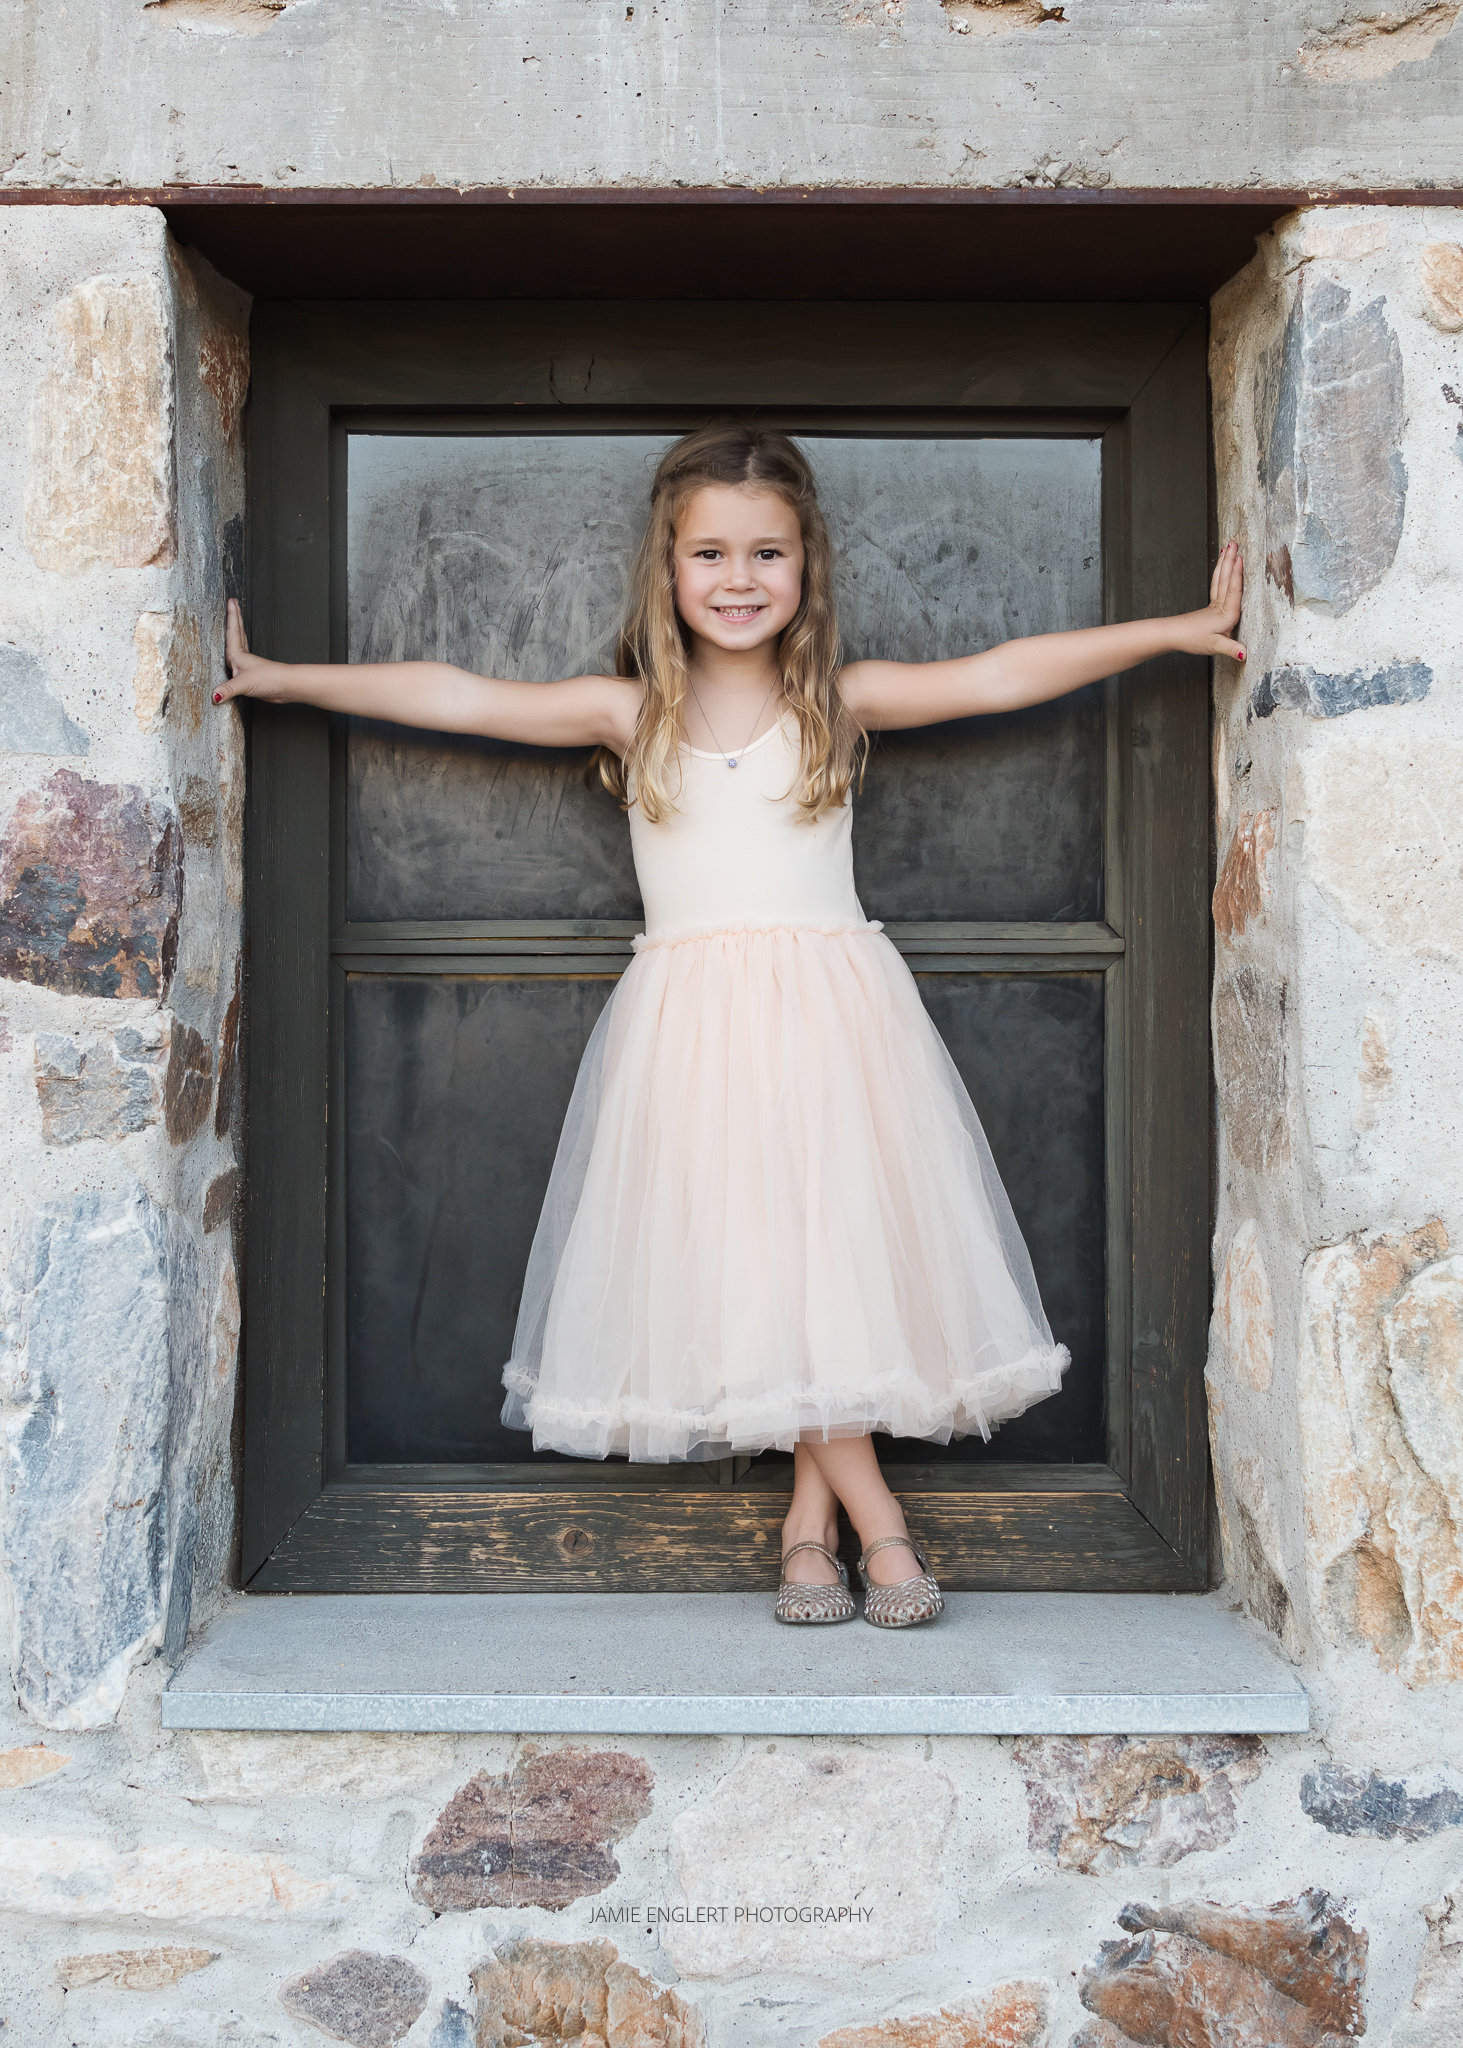 little girl standing in window, smiling